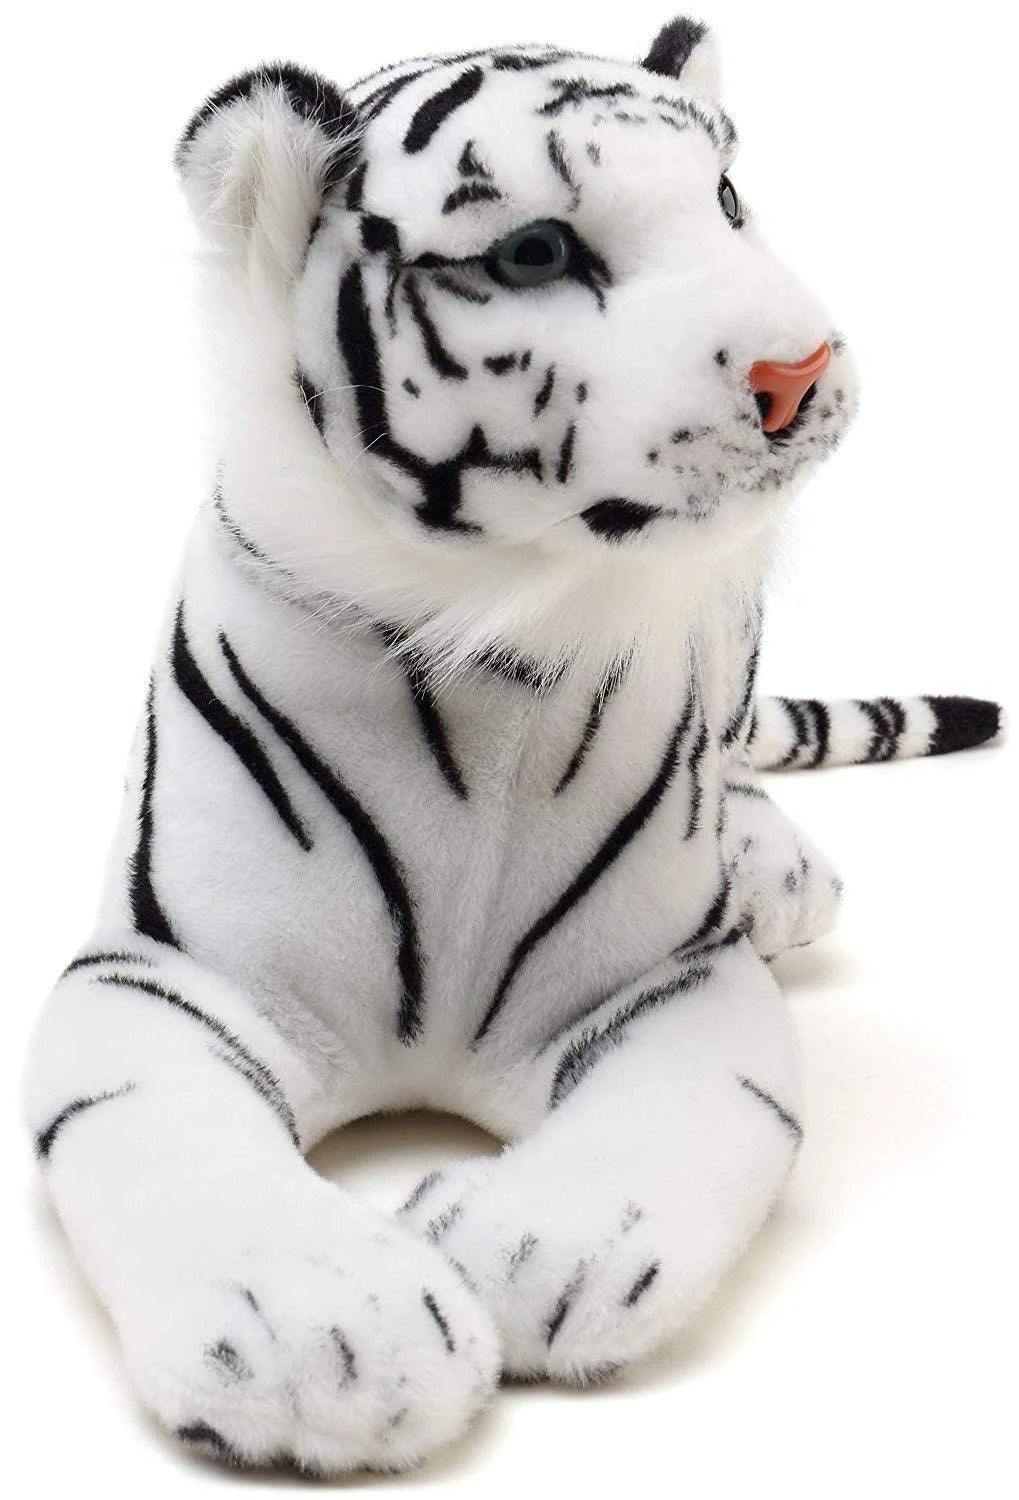 life size white tiger stuffed animal